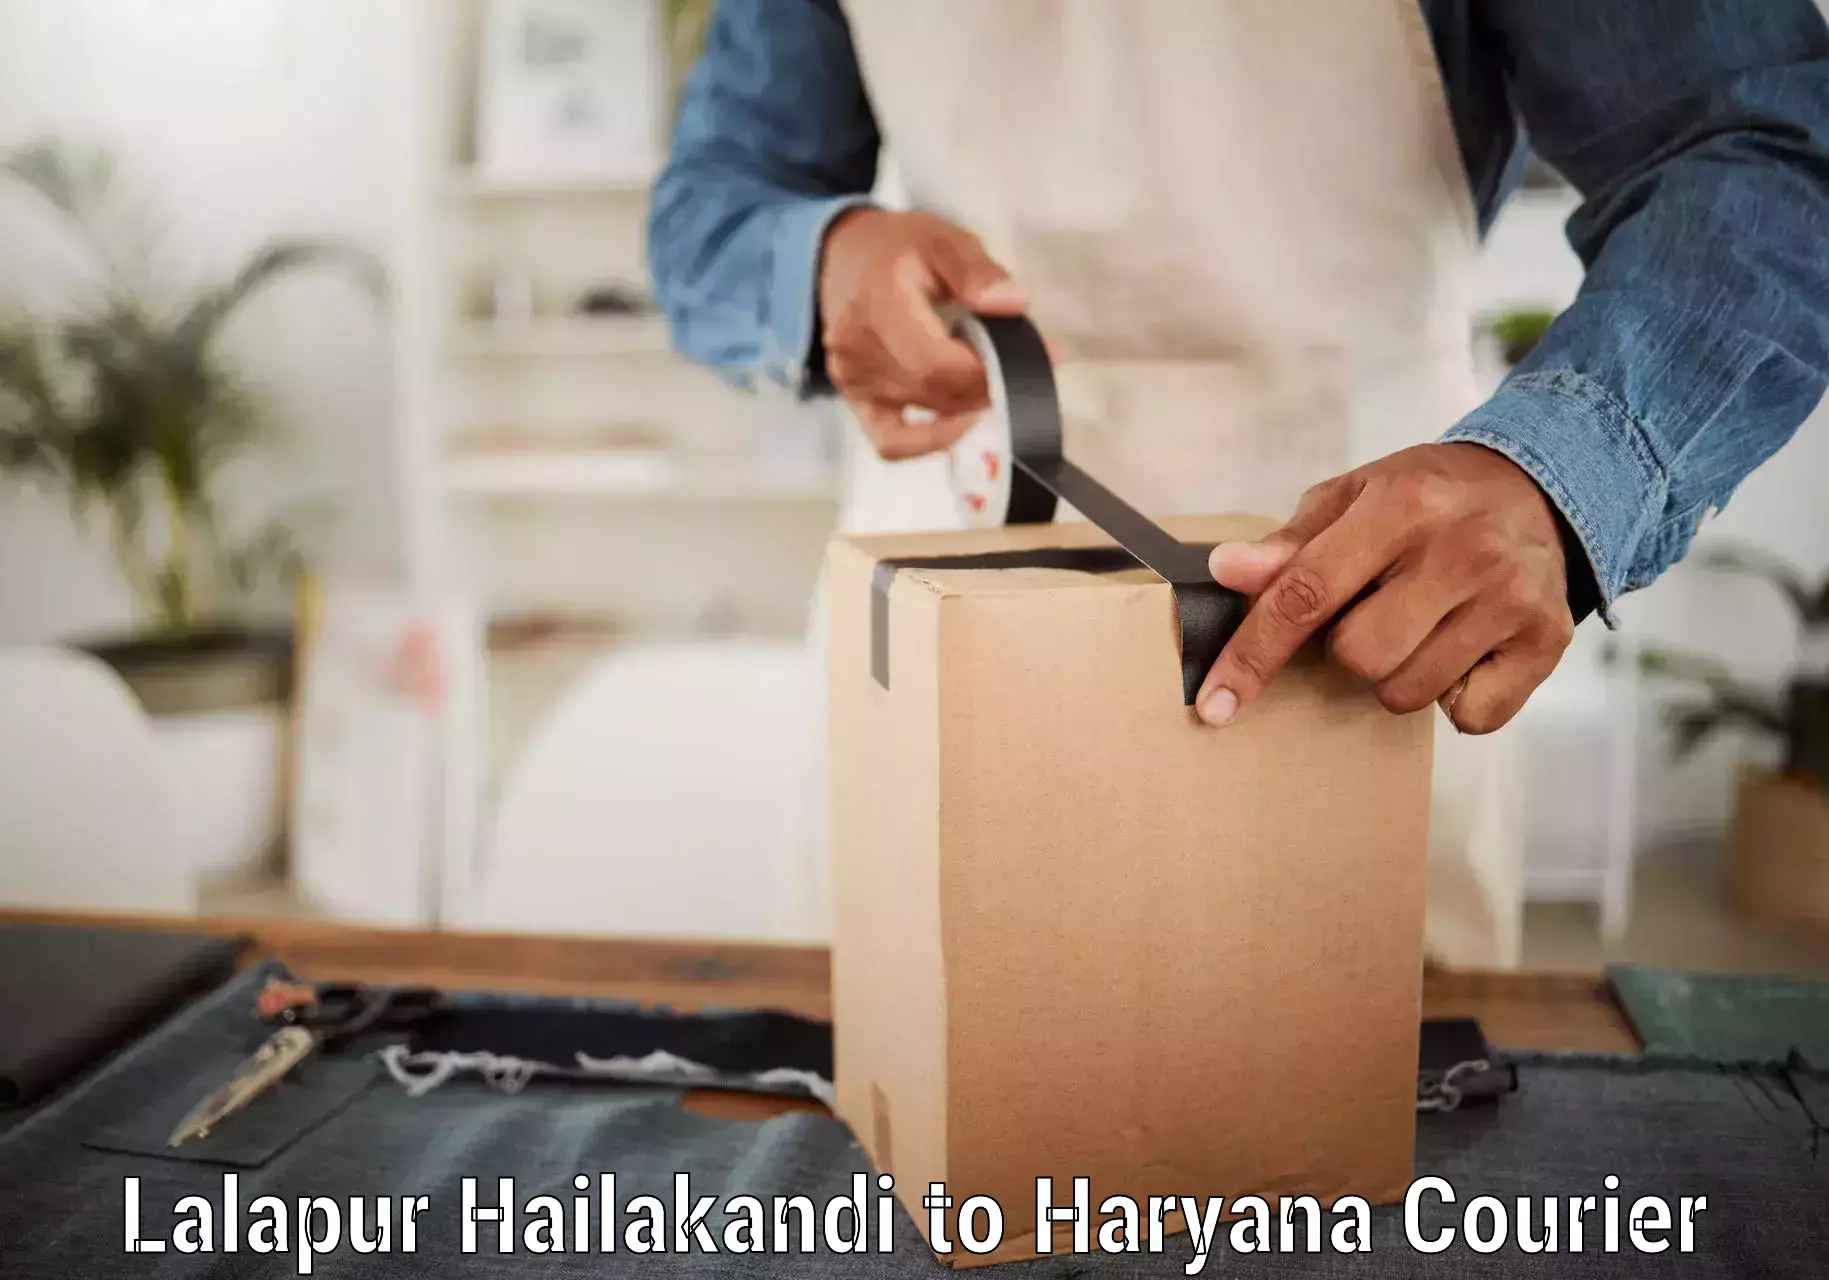 Professional courier handling Lalapur Hailakandi to Faridabad